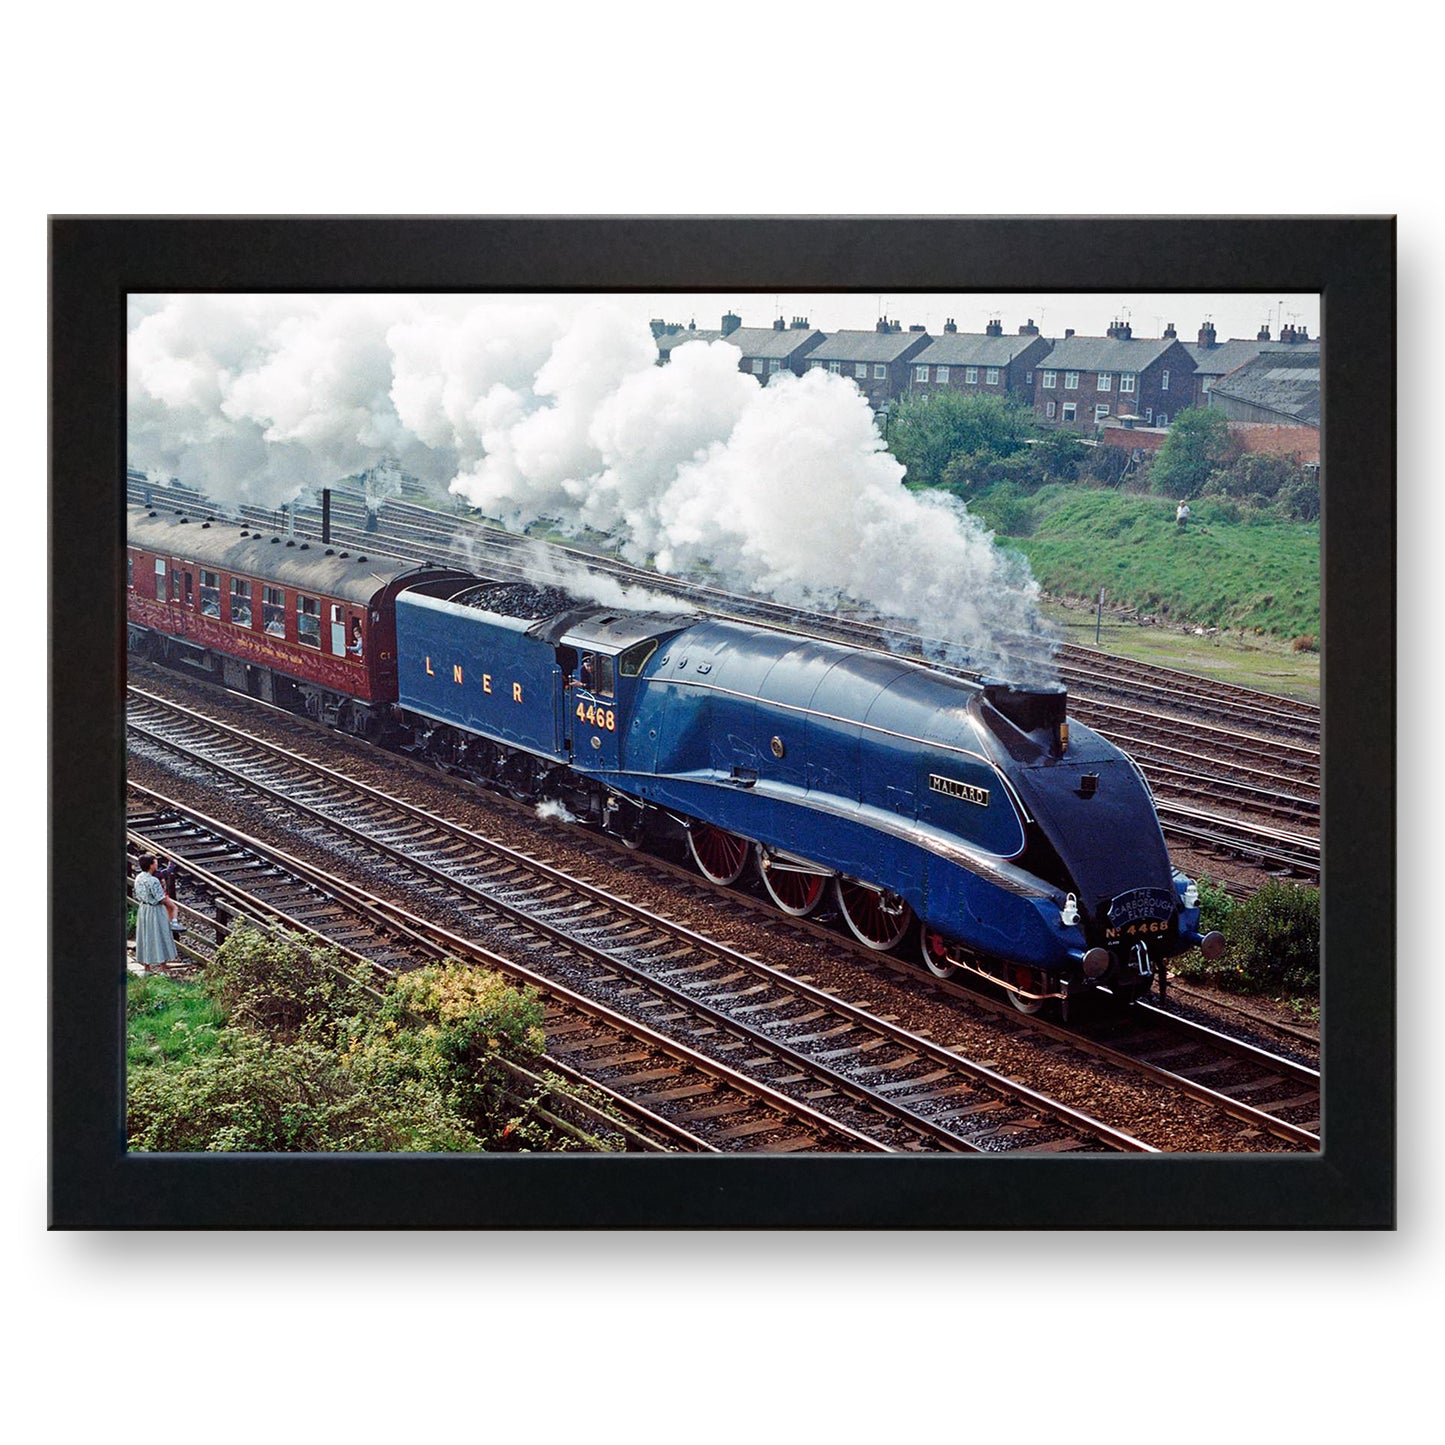 The Mallard Class A4 Steam Train Cushioned Lap Tray - my personalised lap tray | mooki   -   